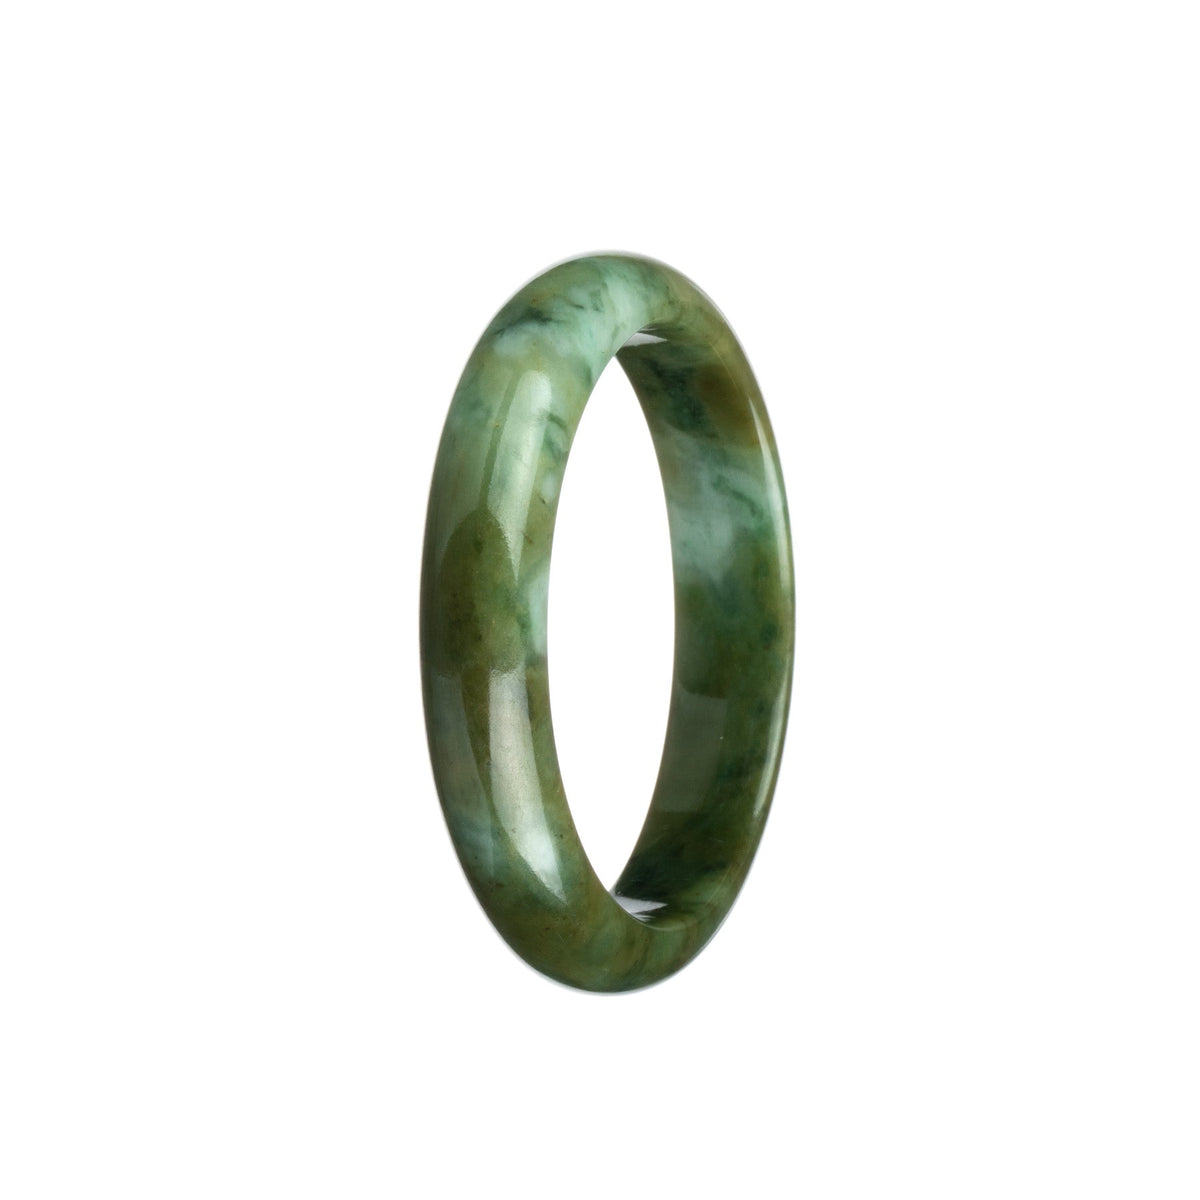 Genuine Grade A Olive Green Traditional Jade Bangle - 55mm Half Moon